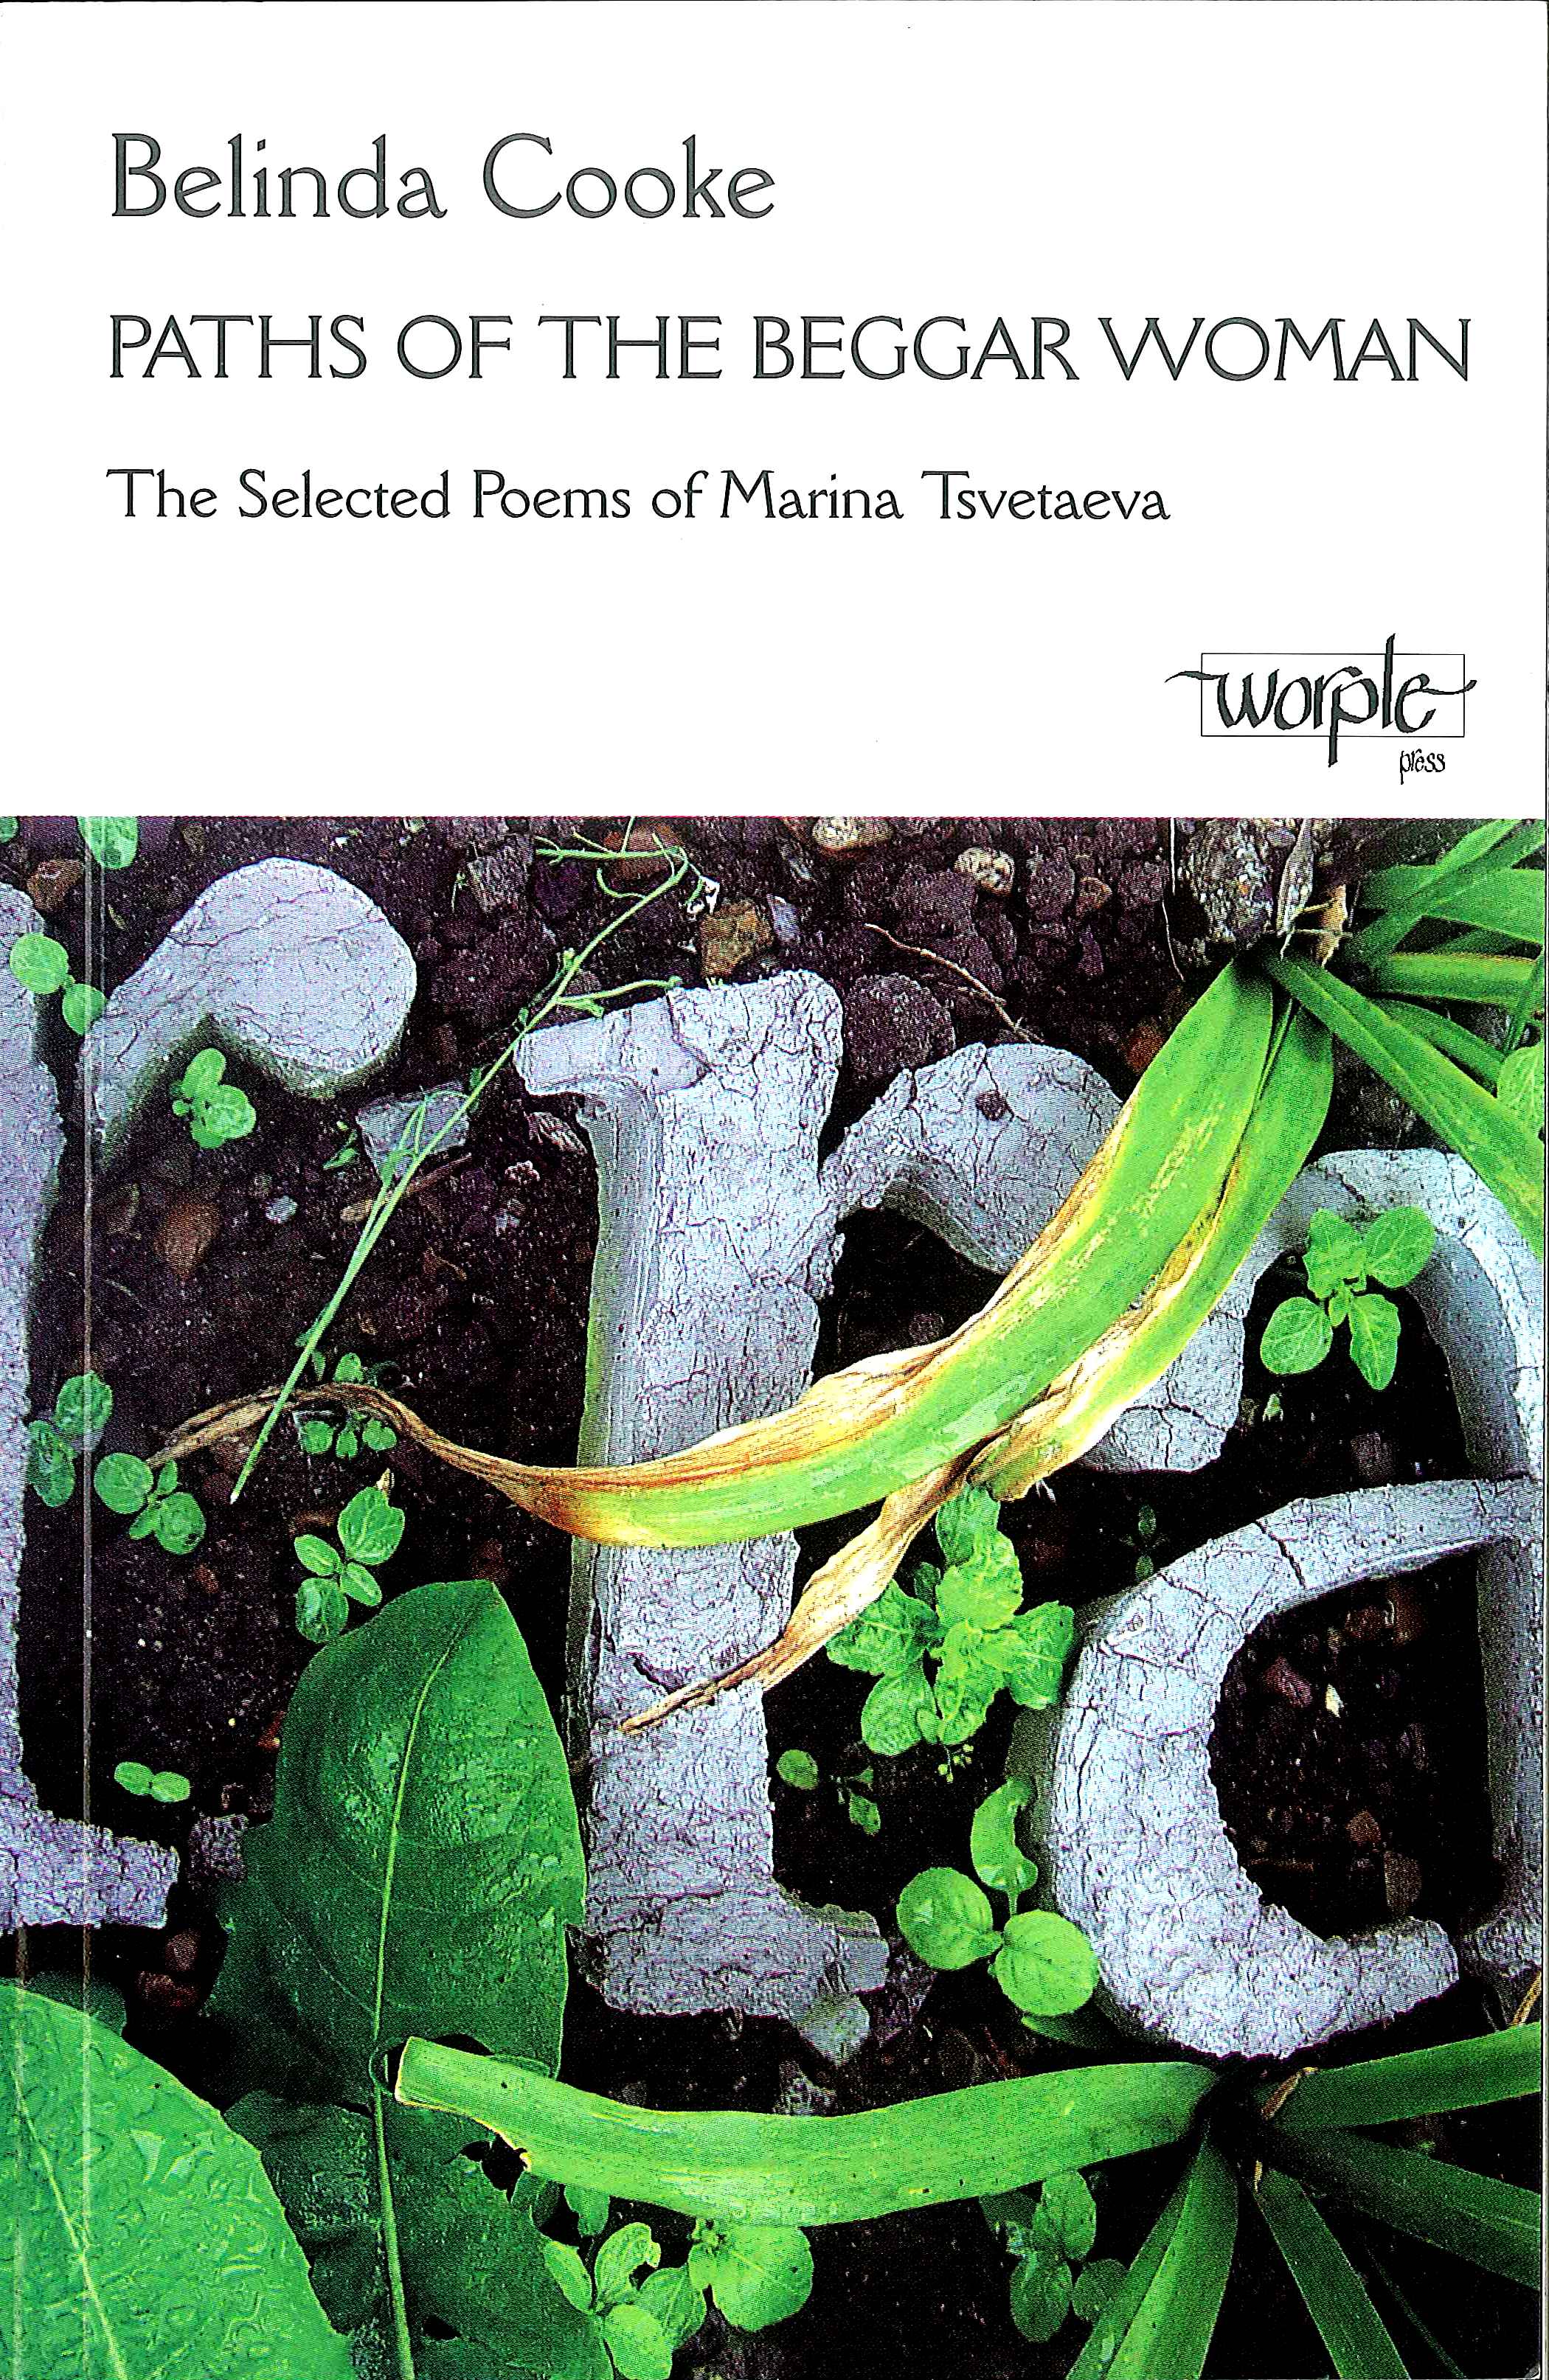 Paths of the Beggar Woman: The Selected Poems of Marina Tsvetaeva